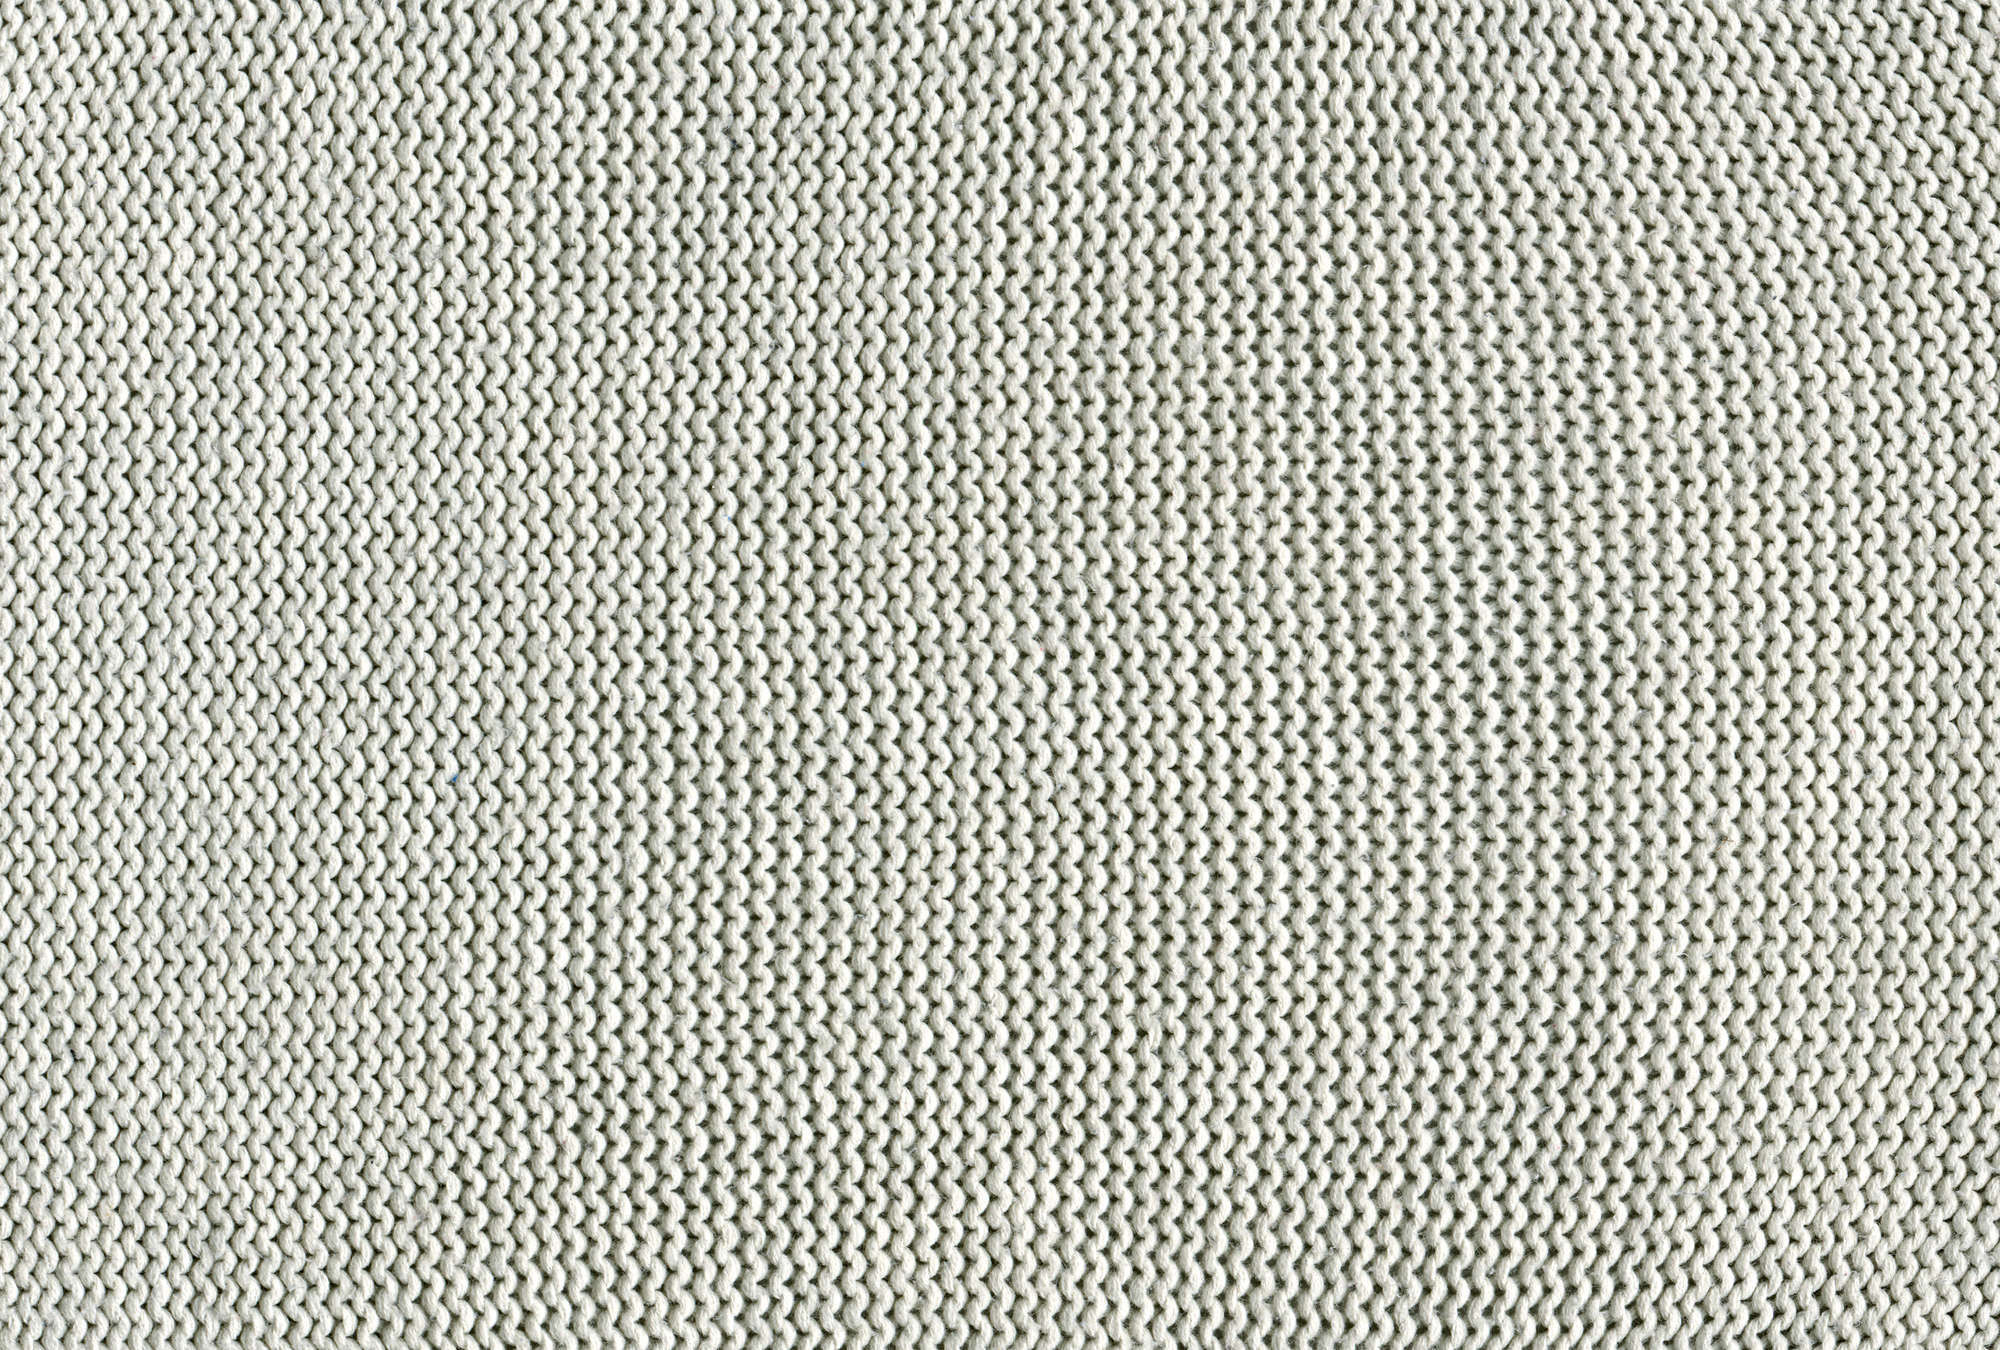             Photo wallpaper black and white with knitting pattern & stitch pattern
        